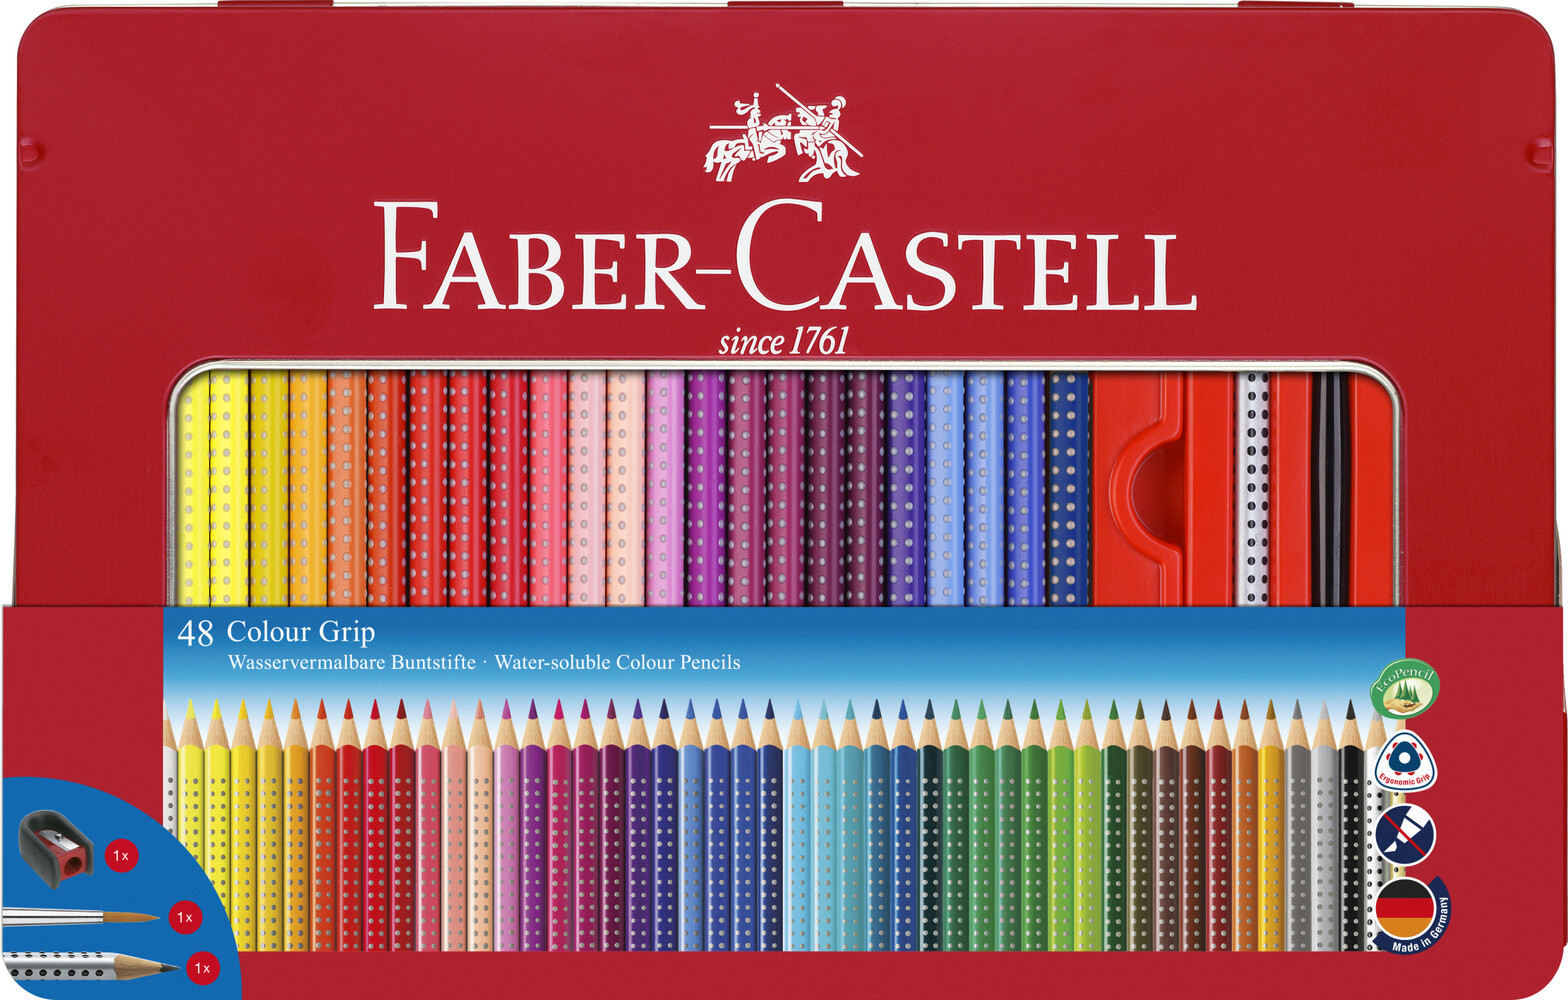 Faber-Castell Buntstifte Colour Grip 48er Set Metalletui